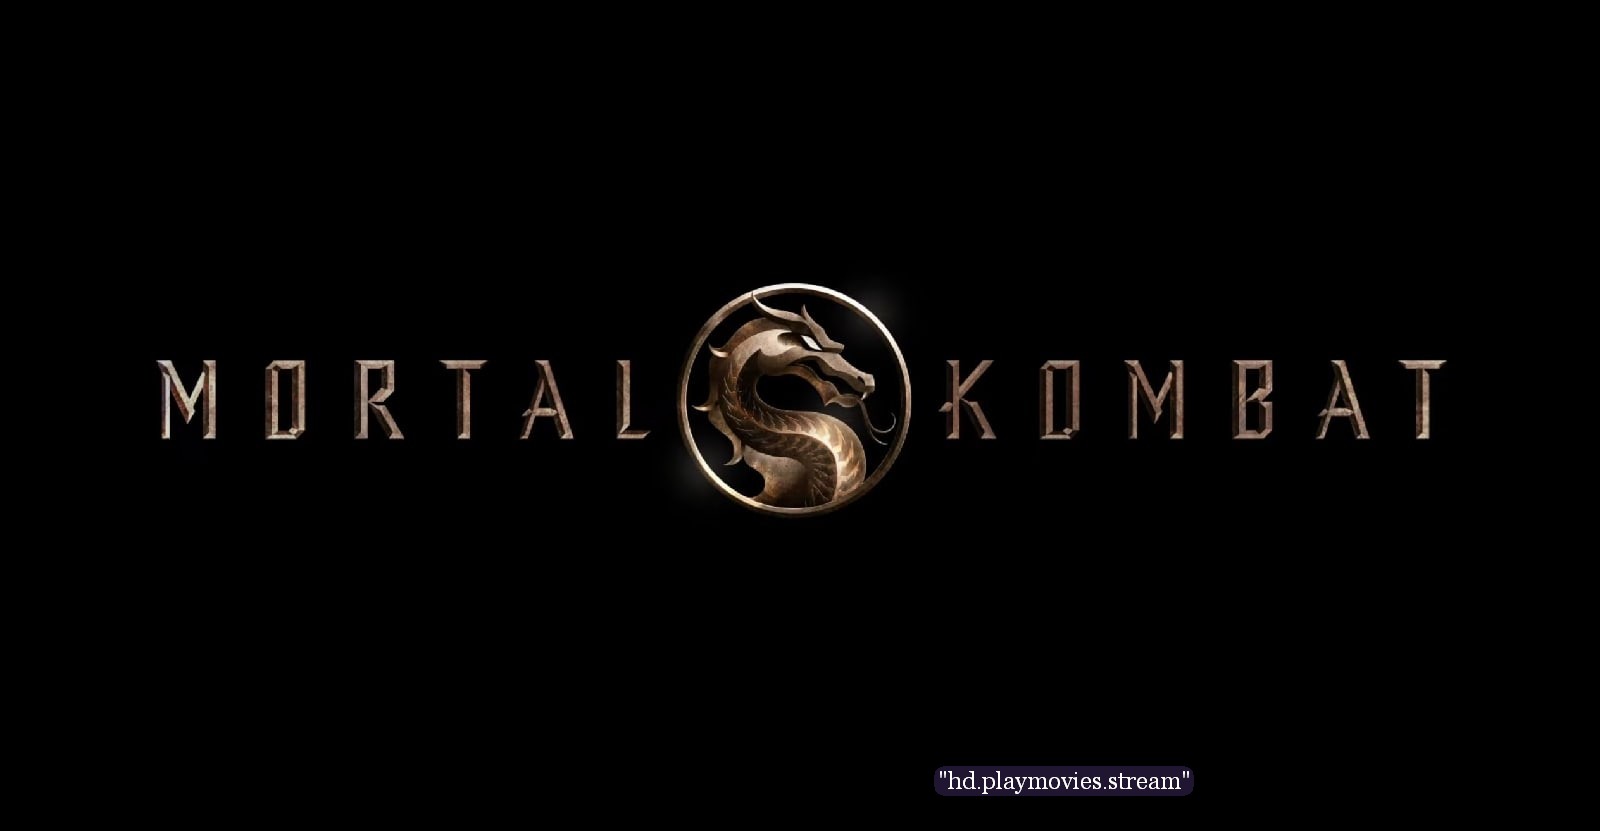 Mortal Kombat ▷Filme➖Completo Online 2021 on X: Mortal Kombat (2021)Assistir  Filmes Completos Online Gratis Portuguese Assistir Mortal Kombat filme  completo dublado online Mortal Kombat filme completo dublado Mortal Kombat  filme completo online